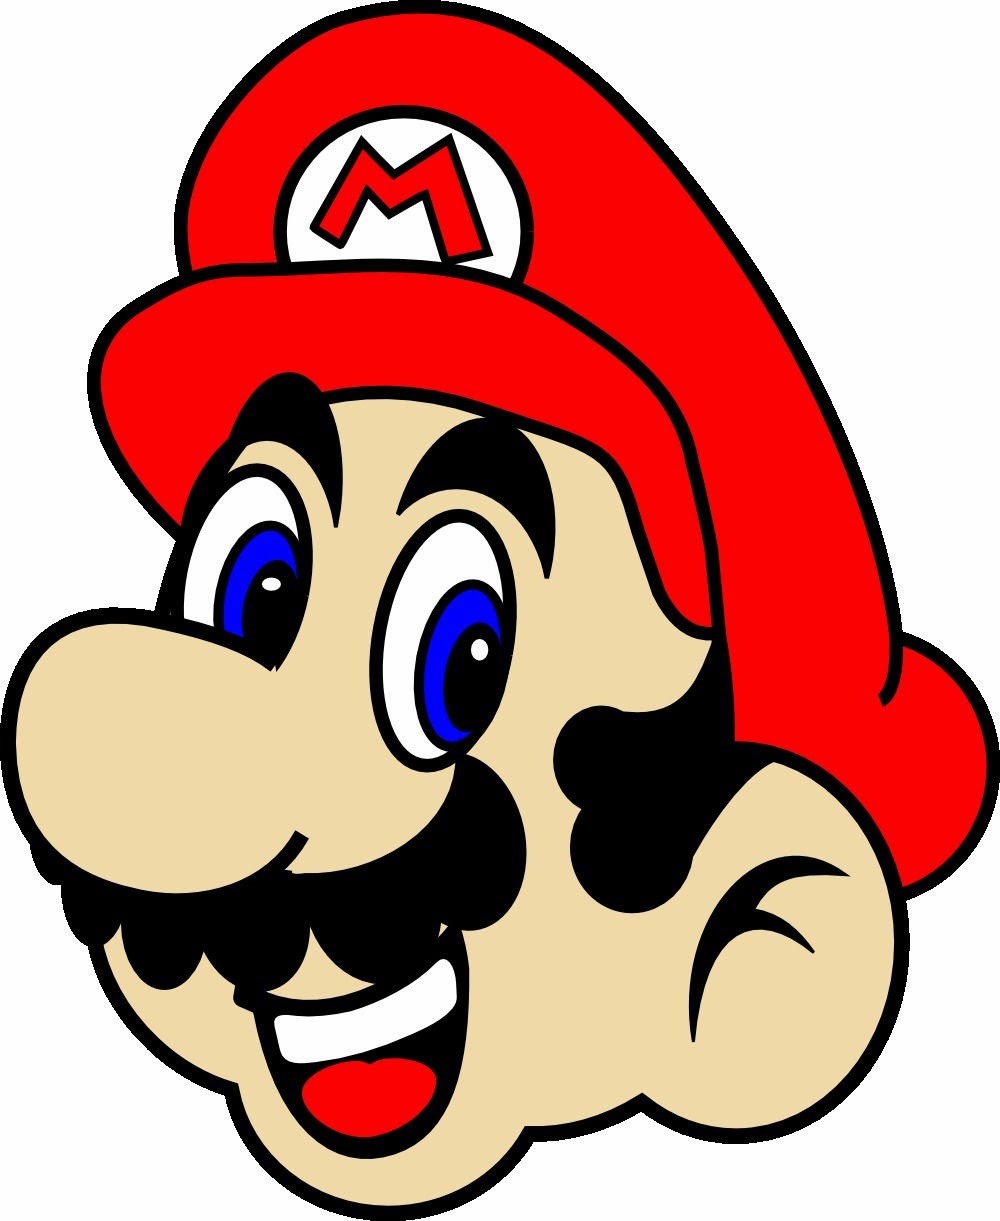 Cara de Mario Bros para colorear - Imagui